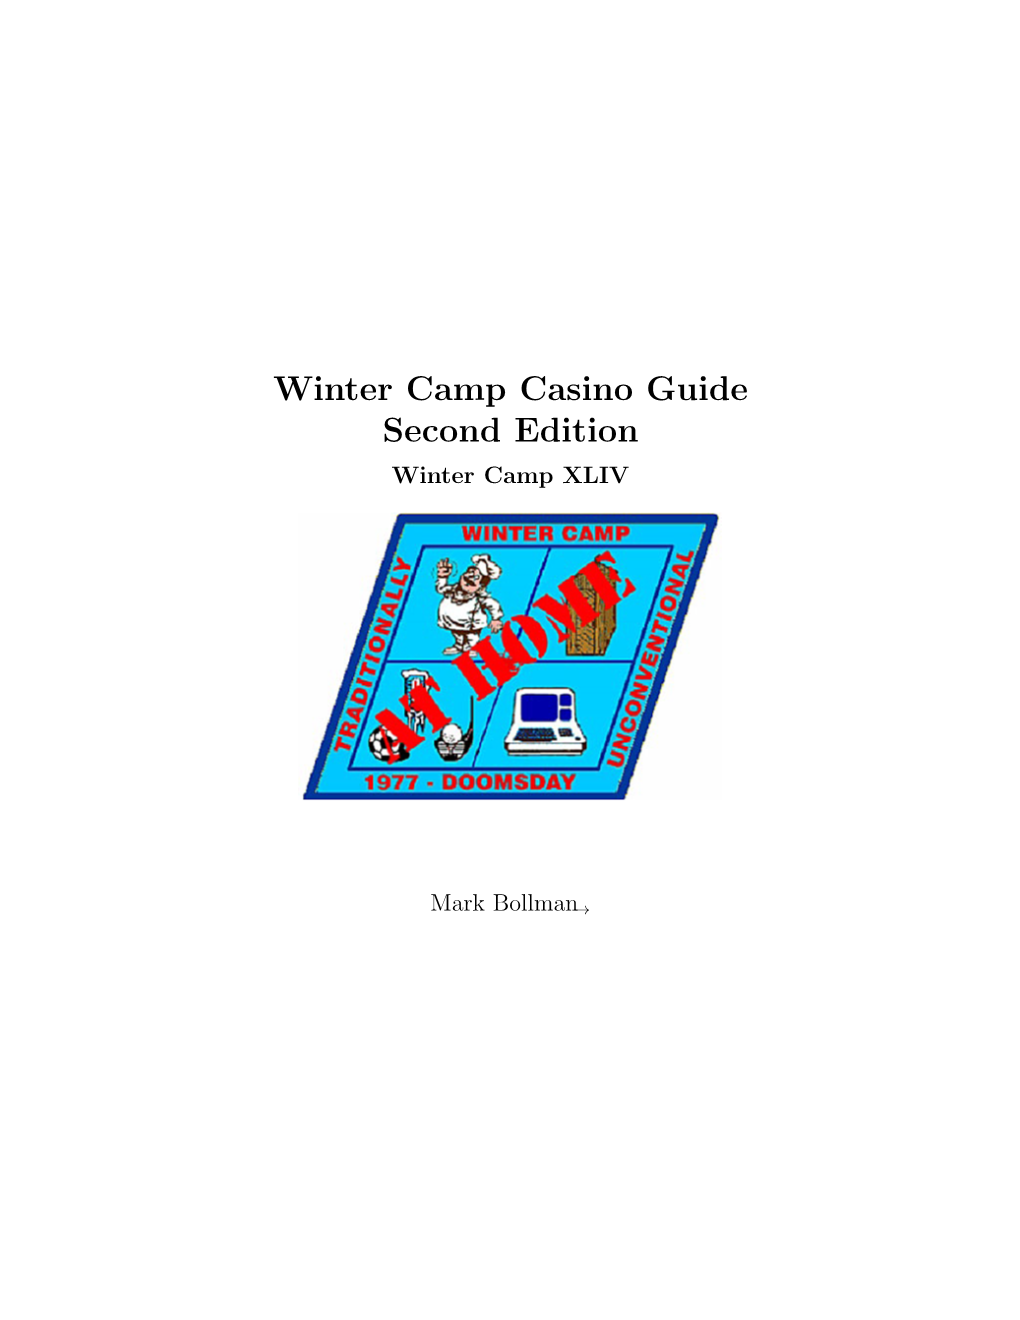 Winter Camp Casino Guide XLIV Edition